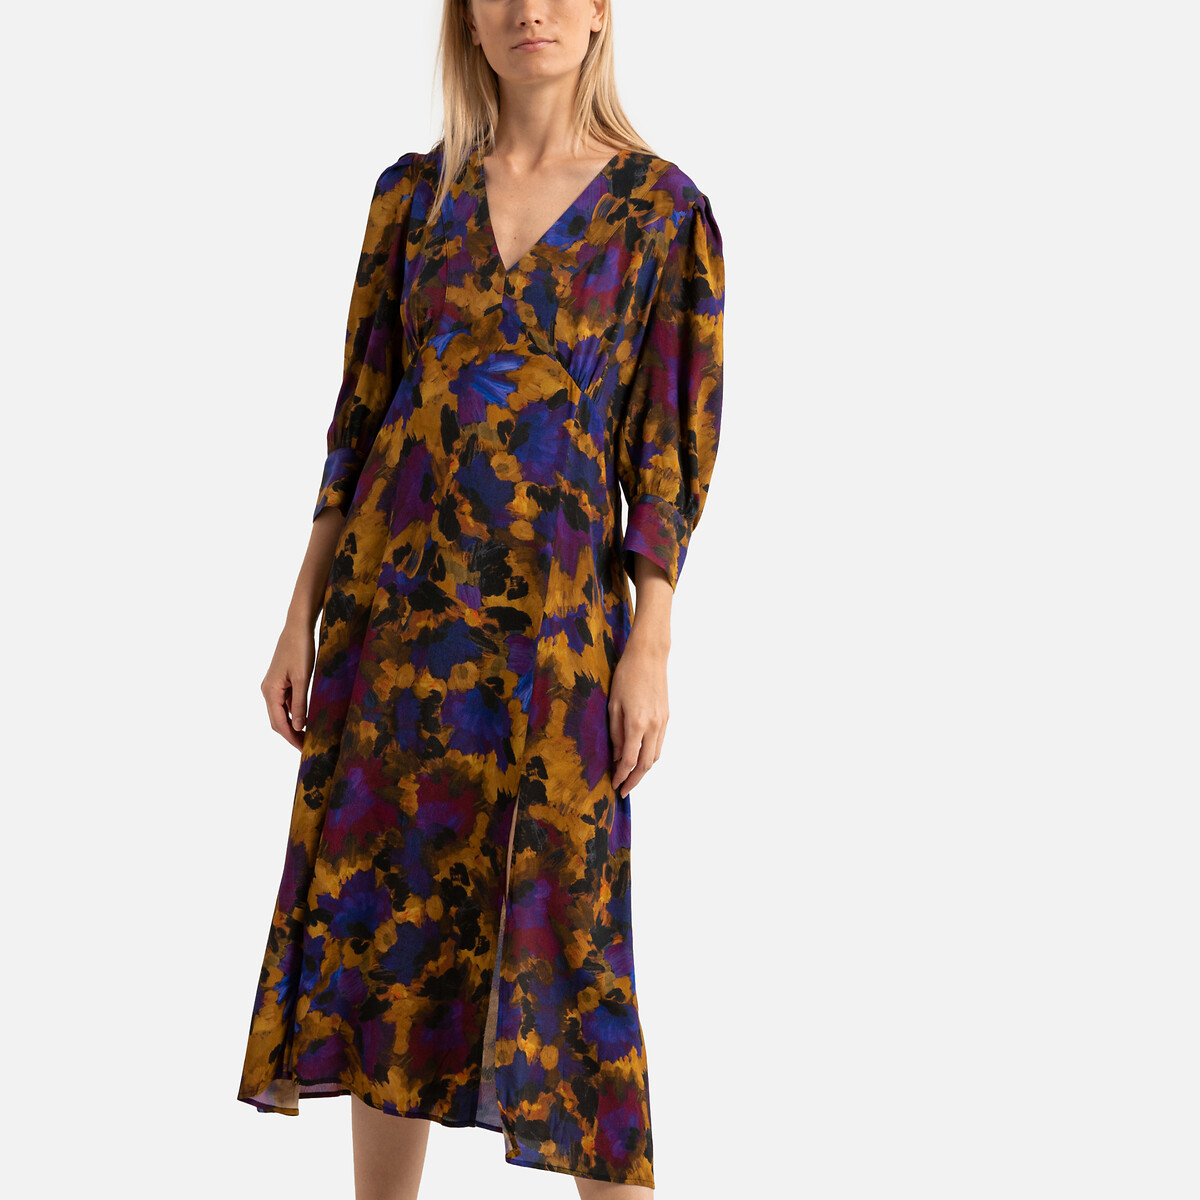 Printed Split Midaxi Dress with 3/4 Length Sleeves